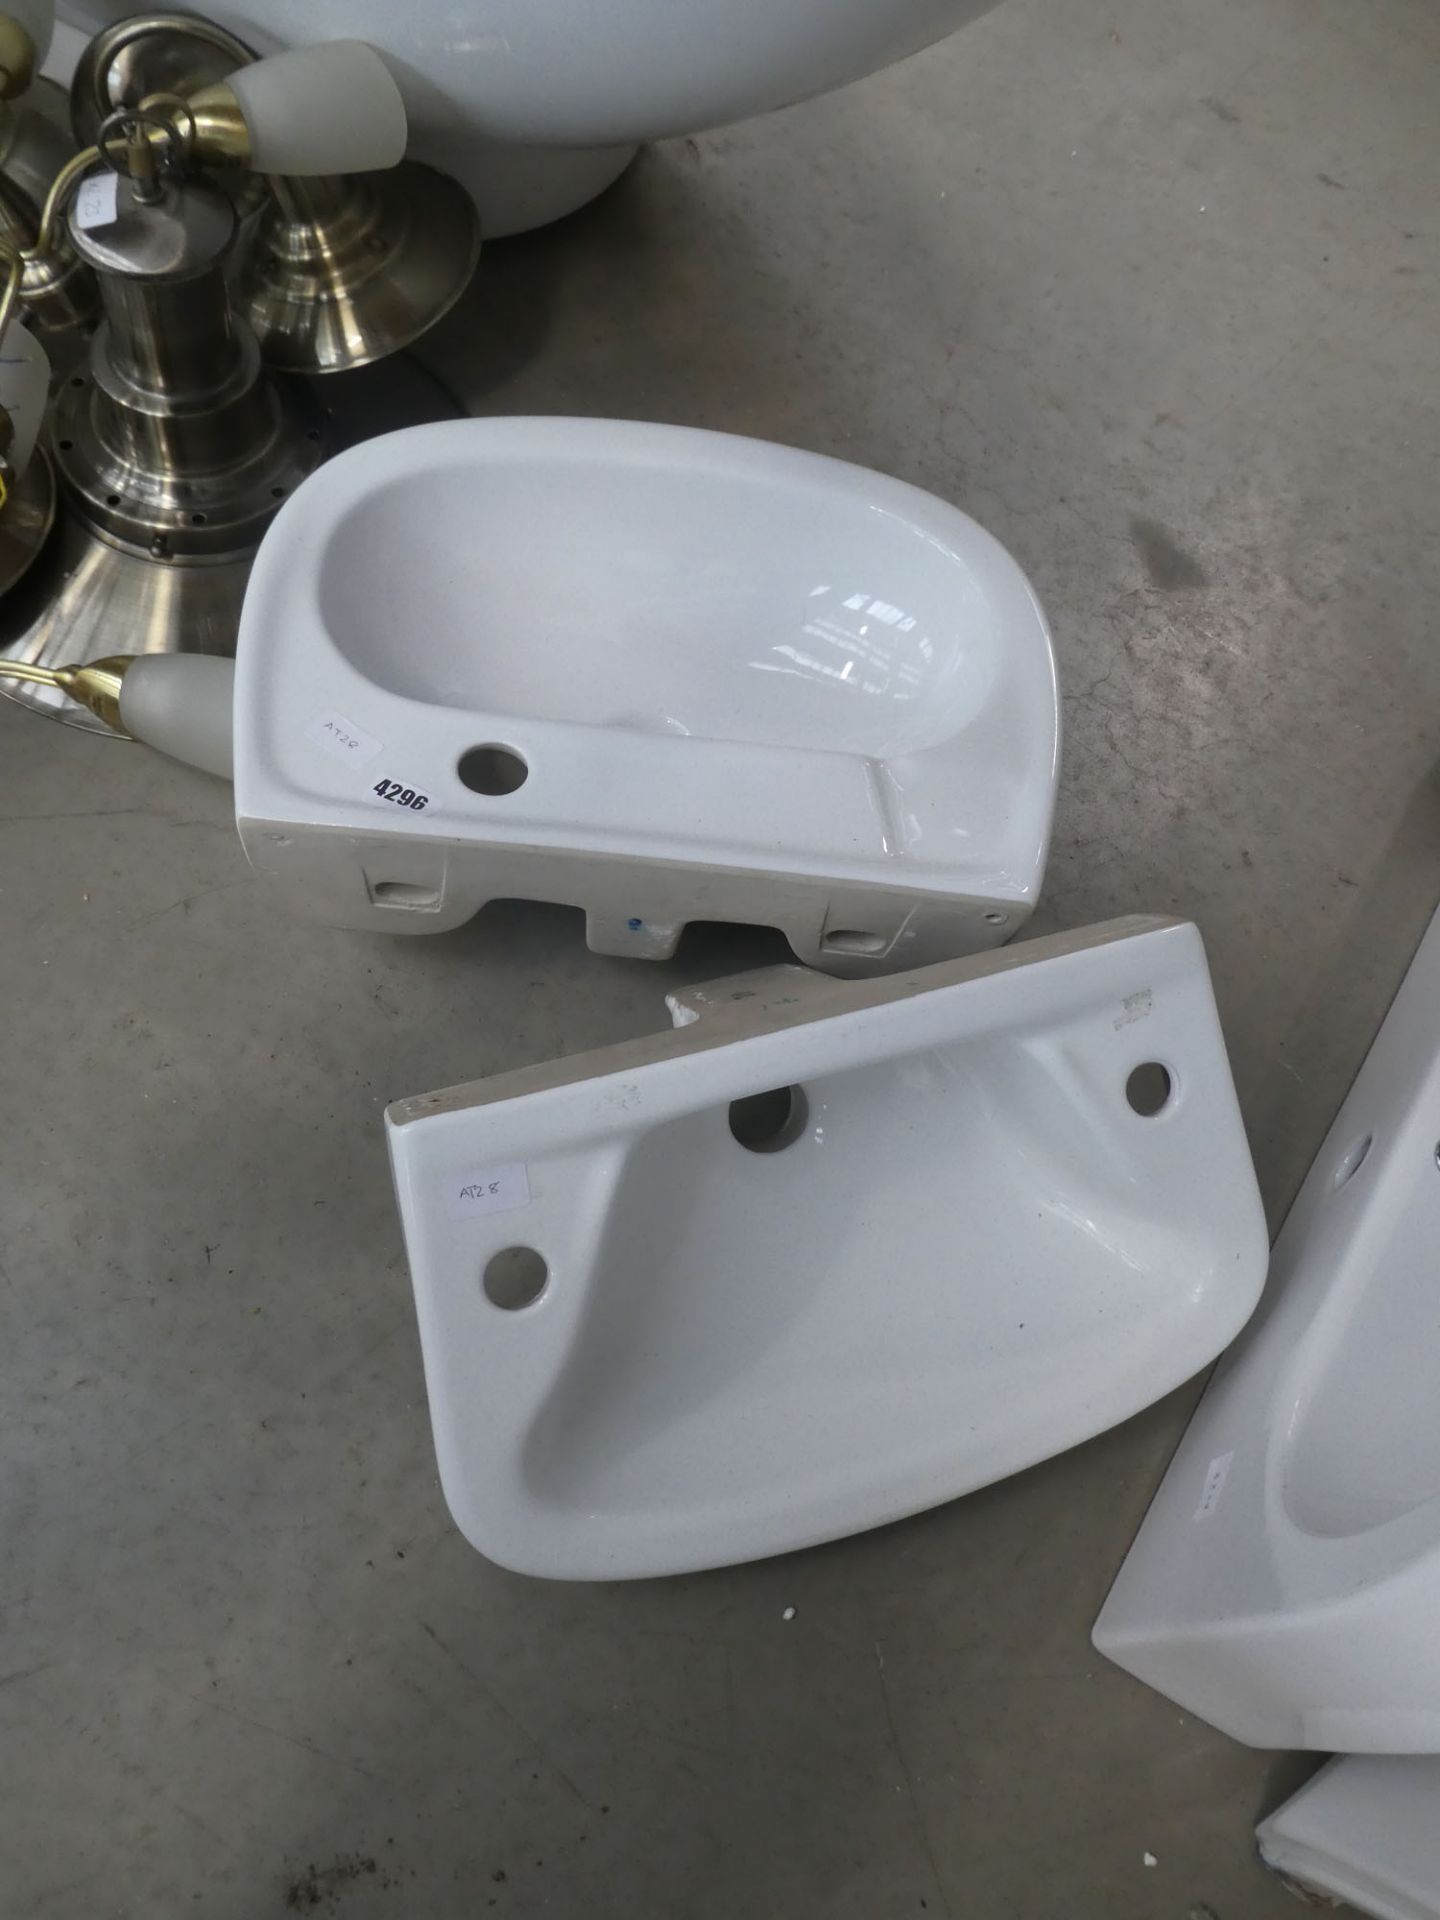 2 small wash basins